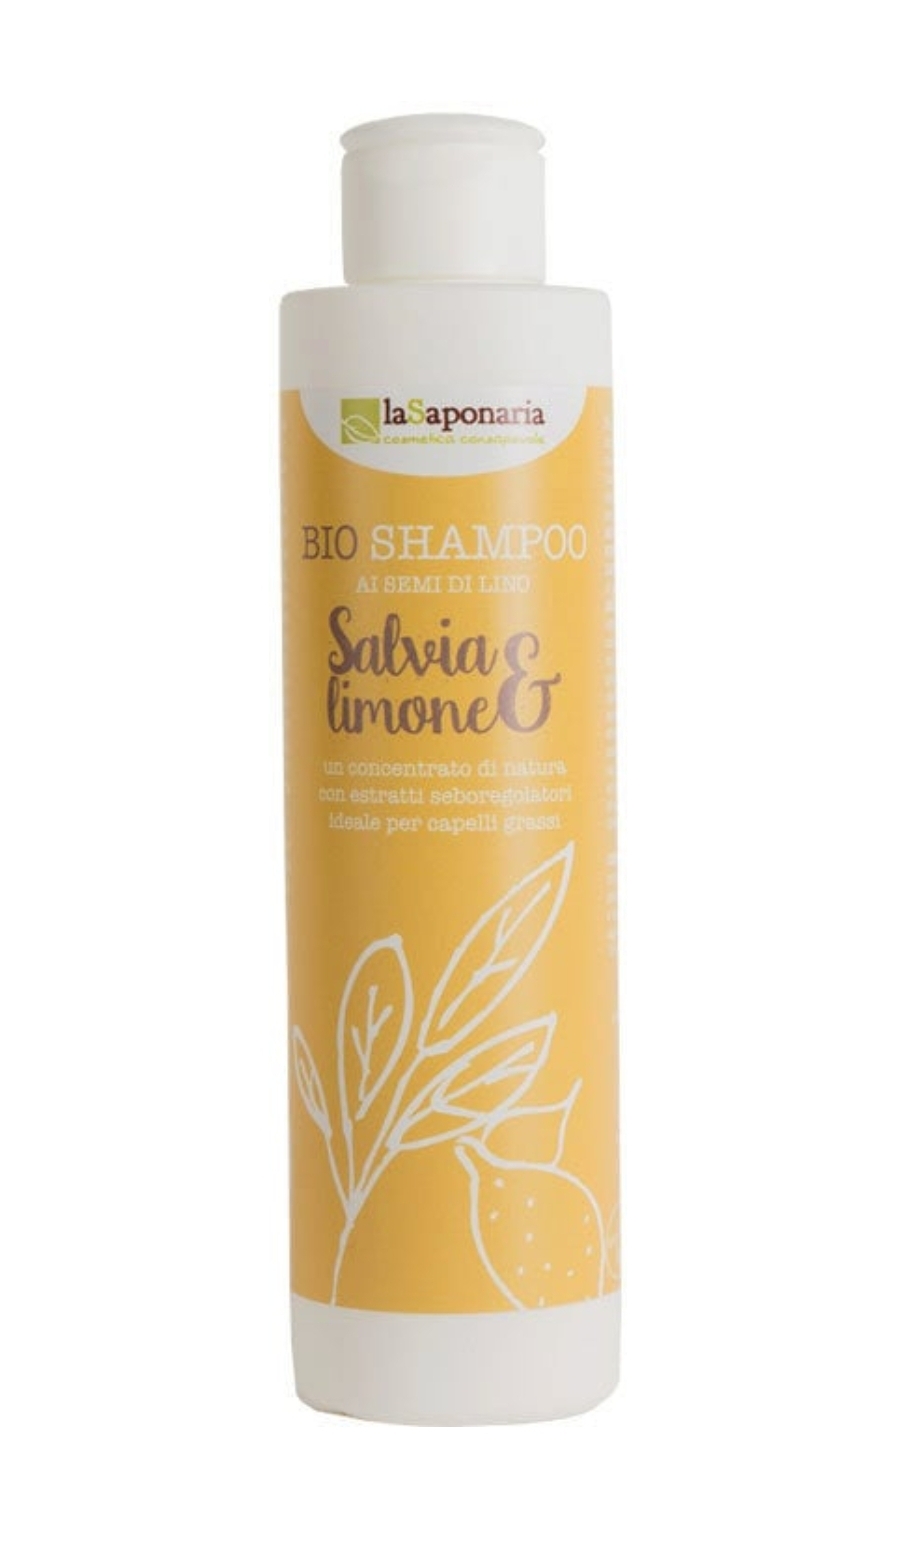 BIO Shampoo Salvia & Limone La Saponaria